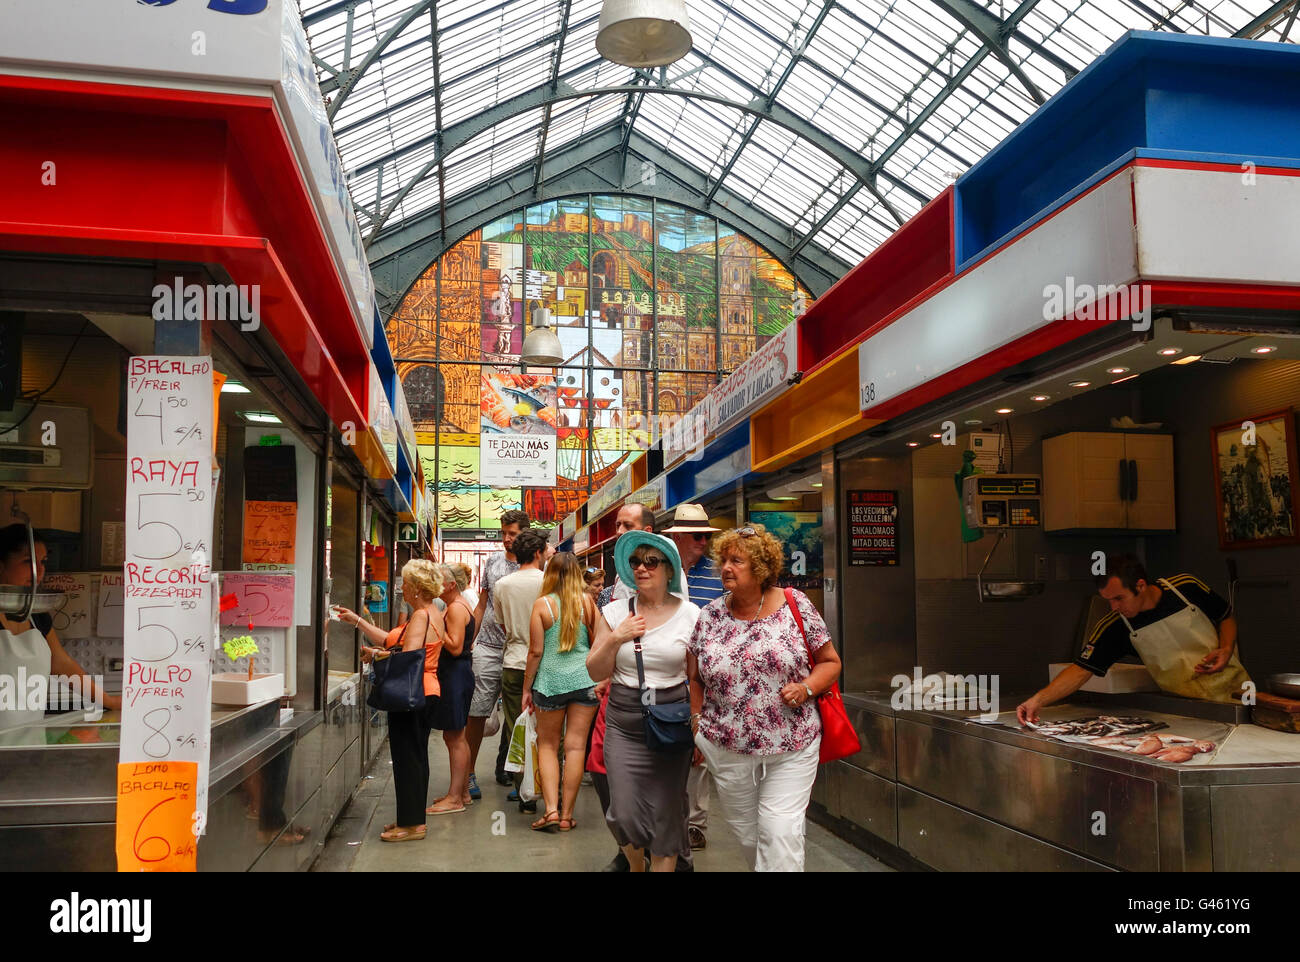 Interior of Atarazanas, covered Market with closed vendor kiosks in Malaga, Andalusia, Spain. Stock Photo